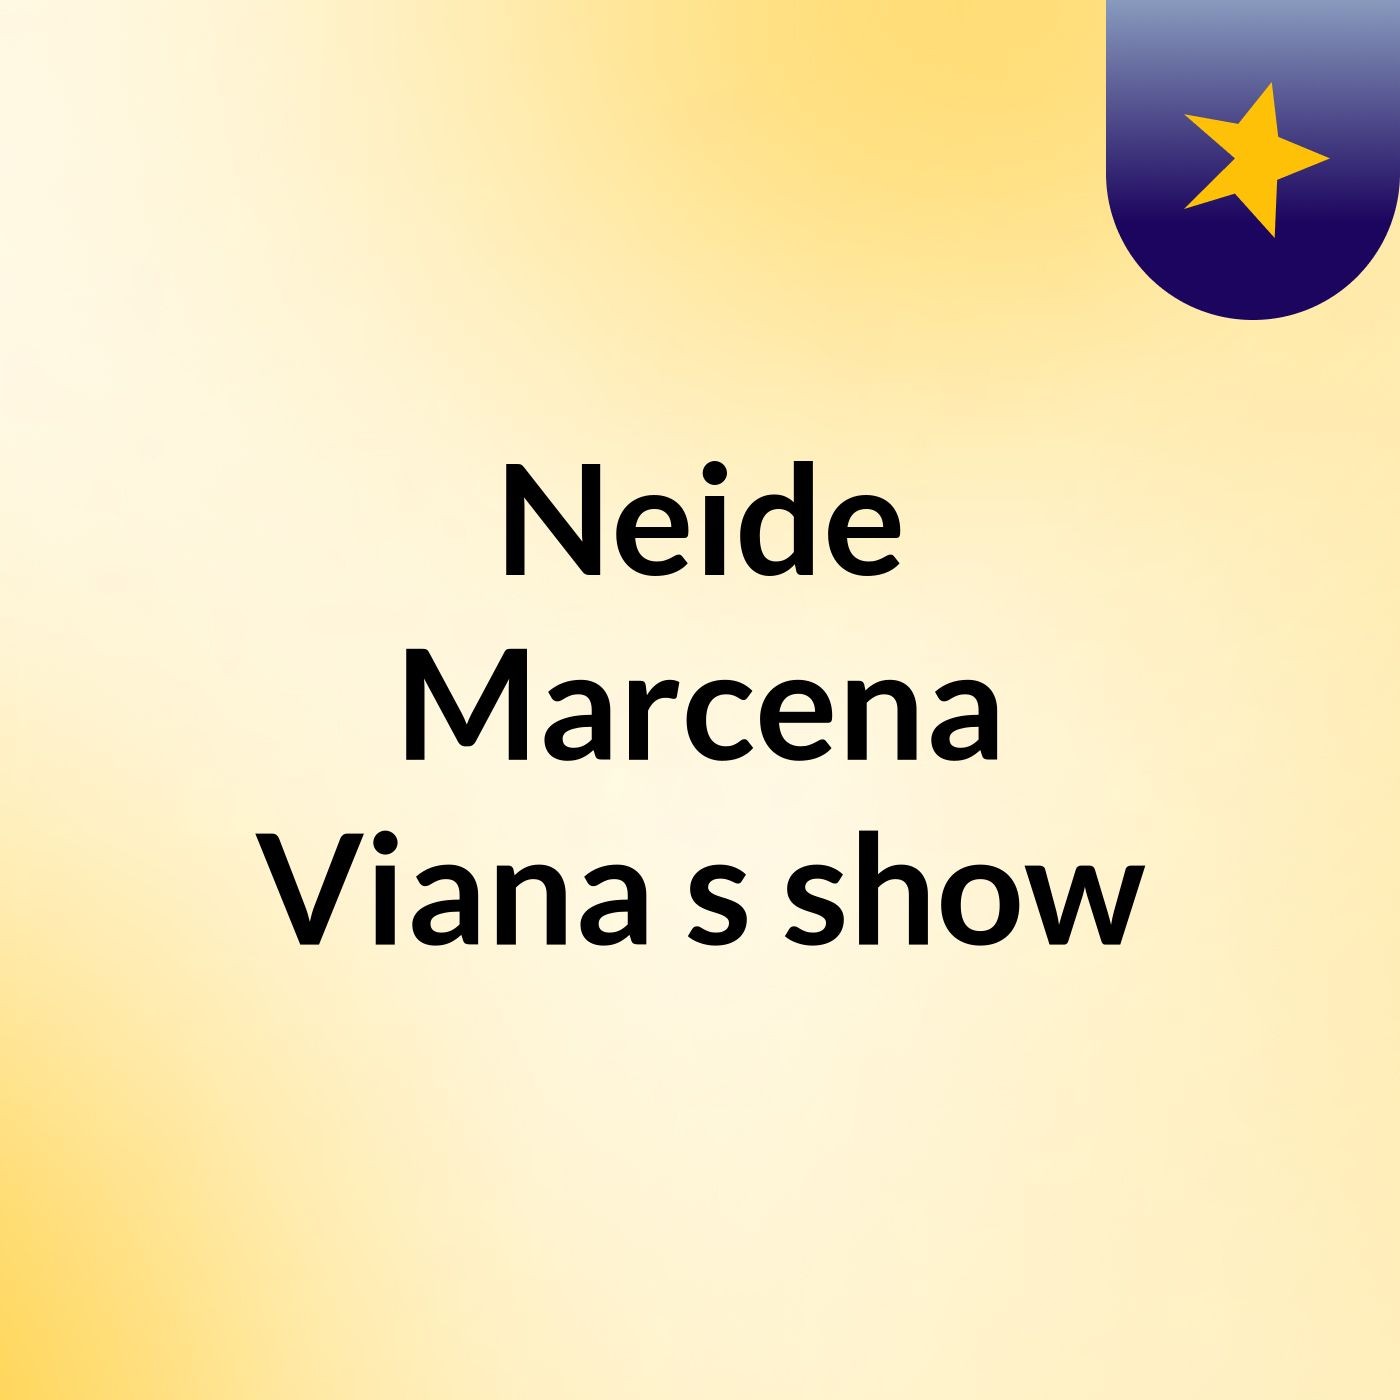 Neide Marcena Viana's show